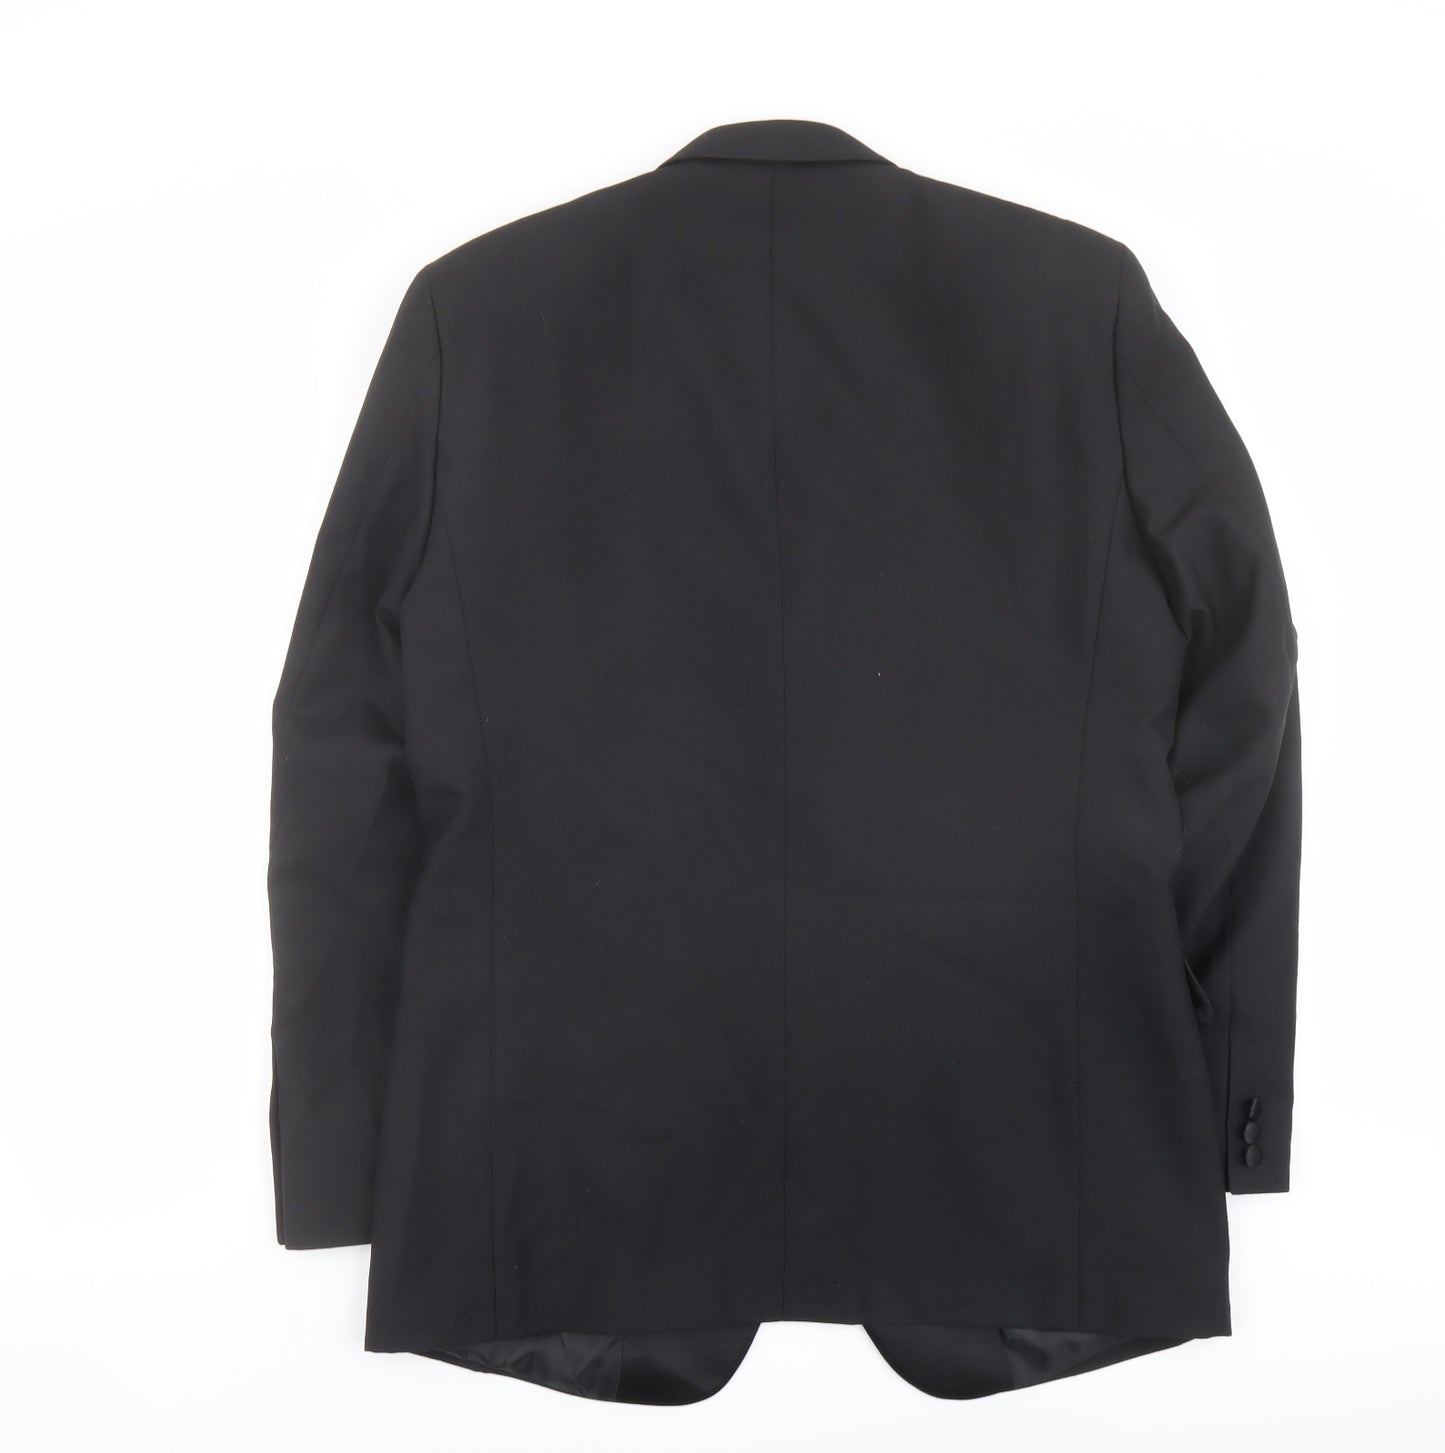 Clemont Dirext Mens Black Polyester Tuxedo Suit Jacket Size 40 Regular